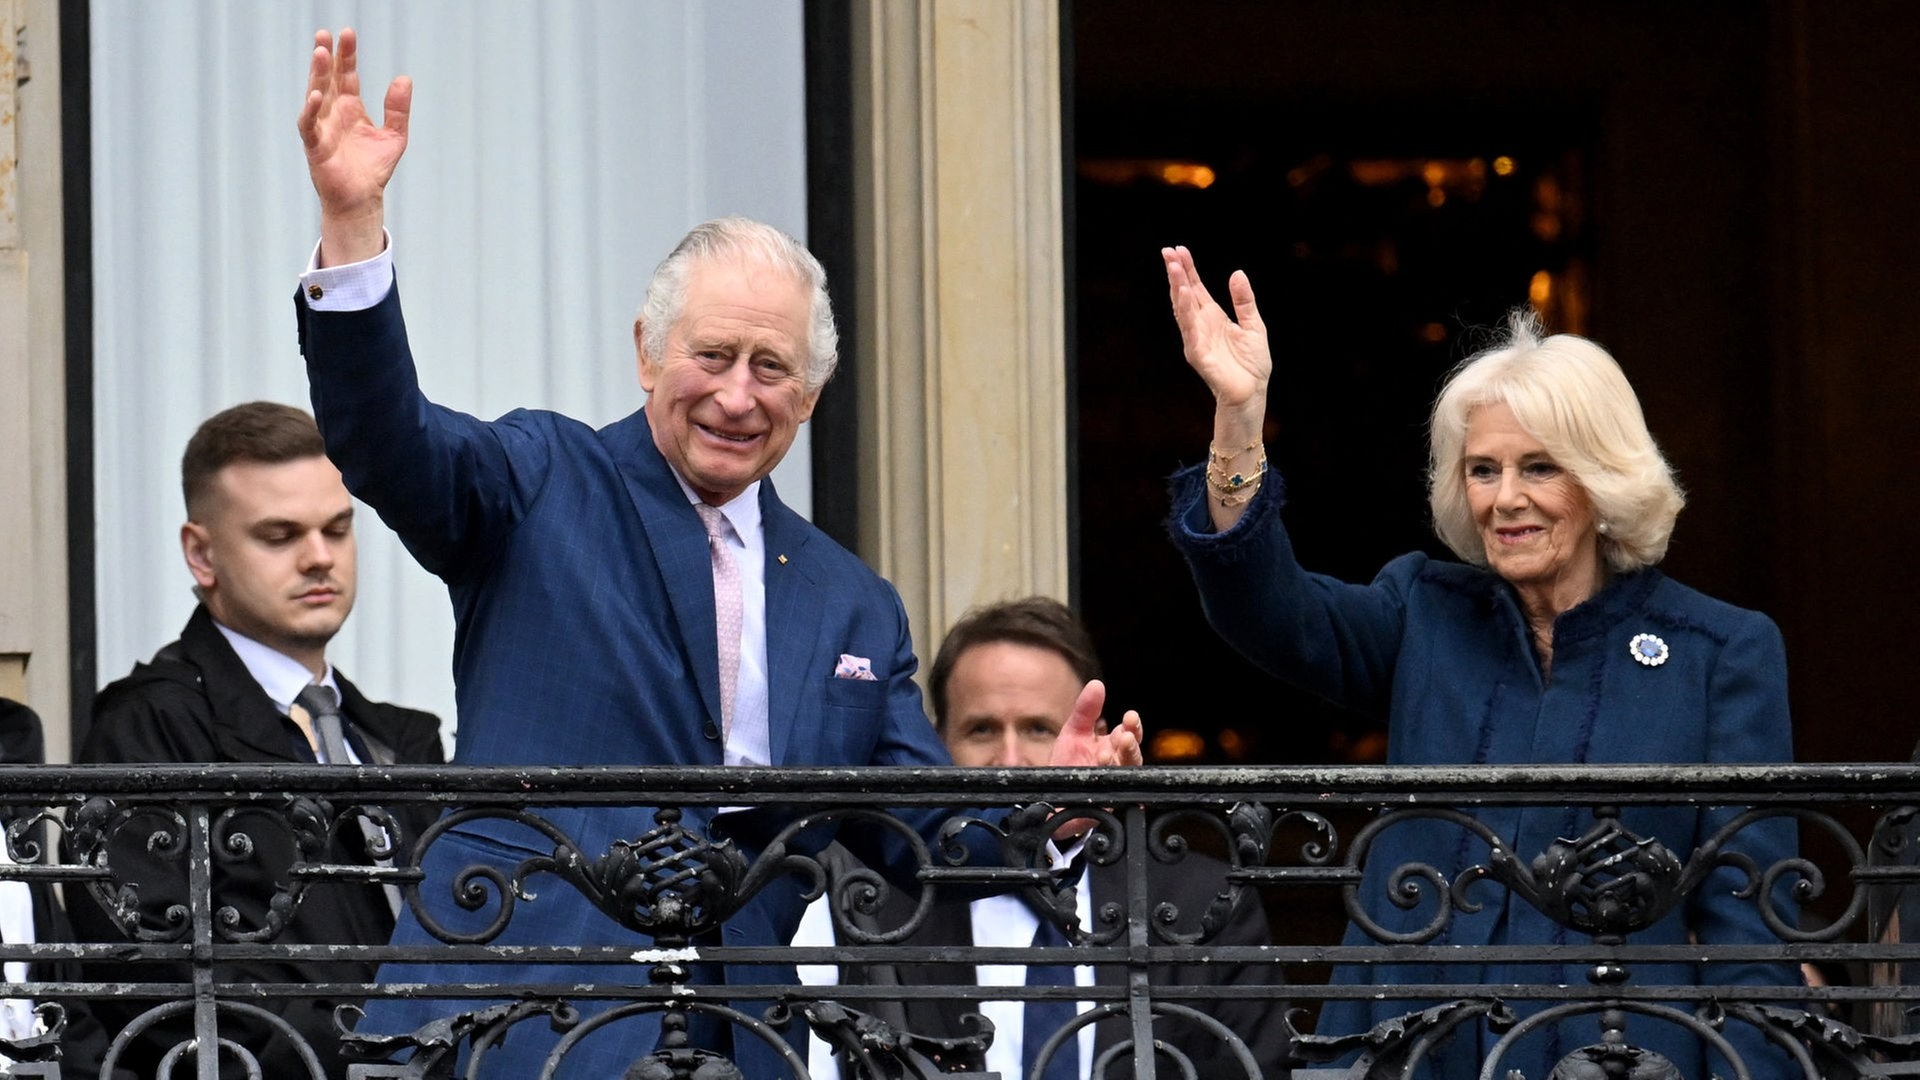 Jubel trotz Regen: König Charles III. und Camilla in Hamburg